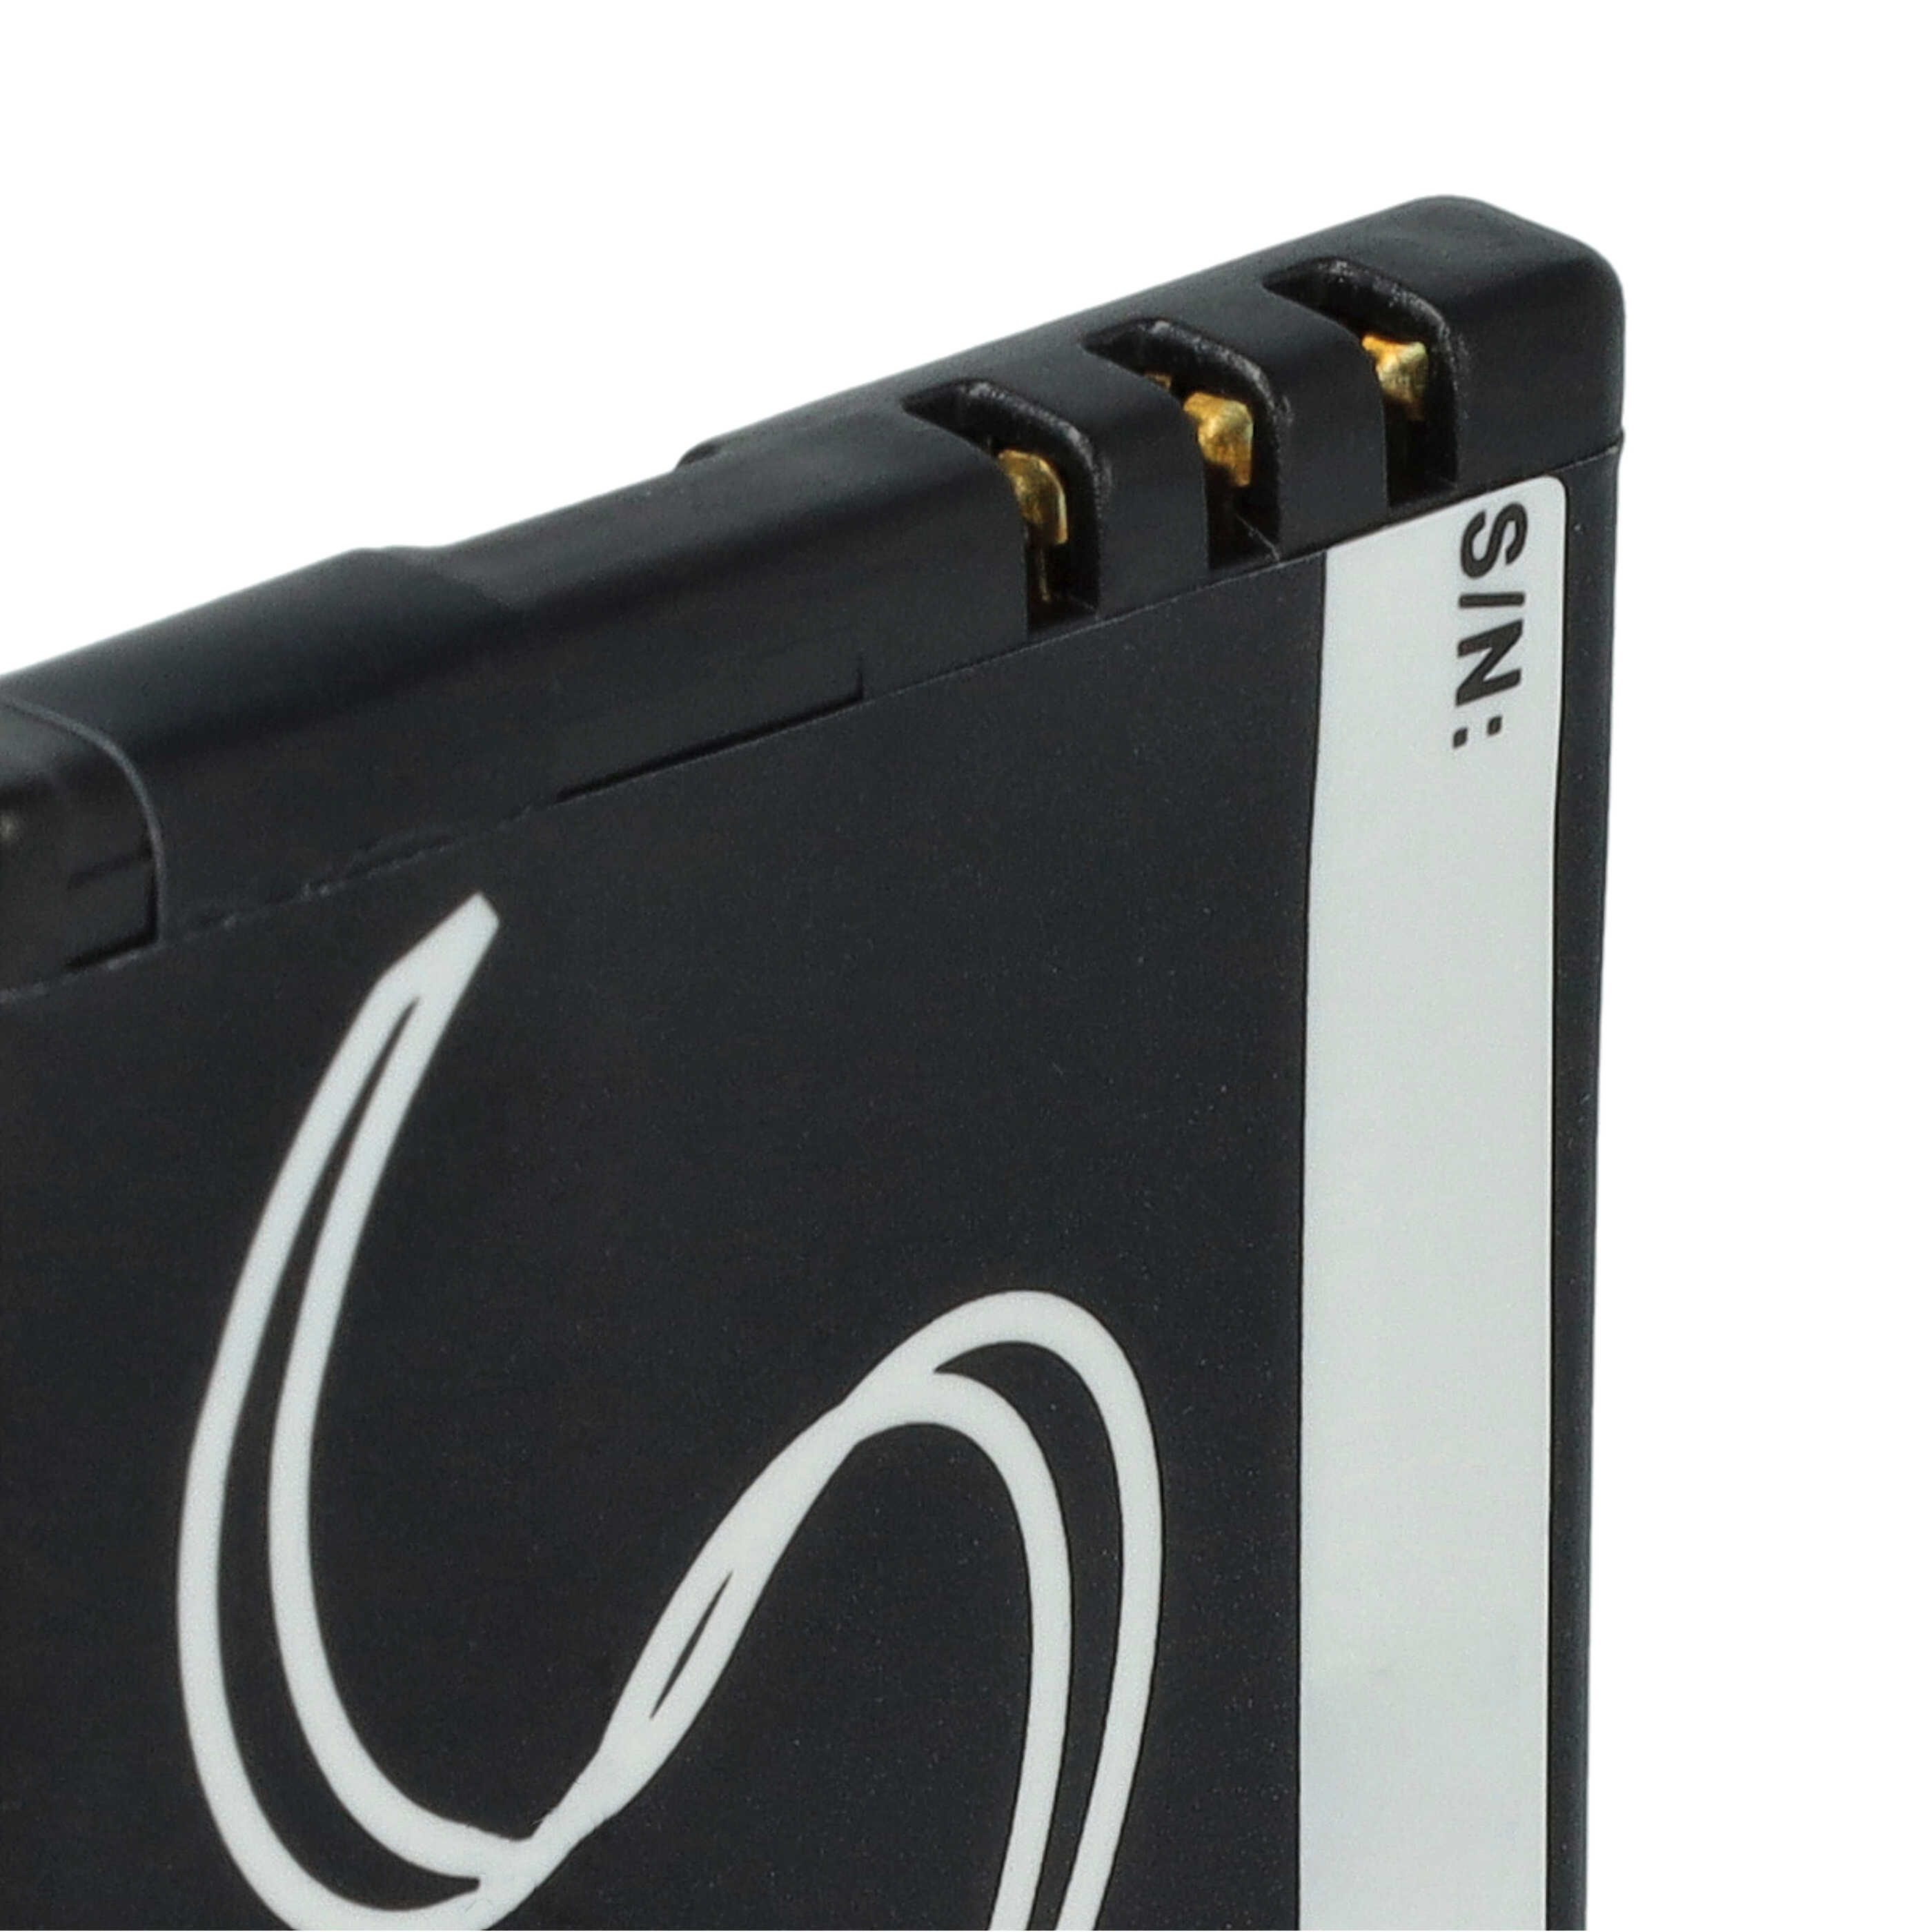 Batteria sostituisce Nokia BL-4BA, BL-4B per cellulare Nokia - 800mAh 3,7V Li-Ion